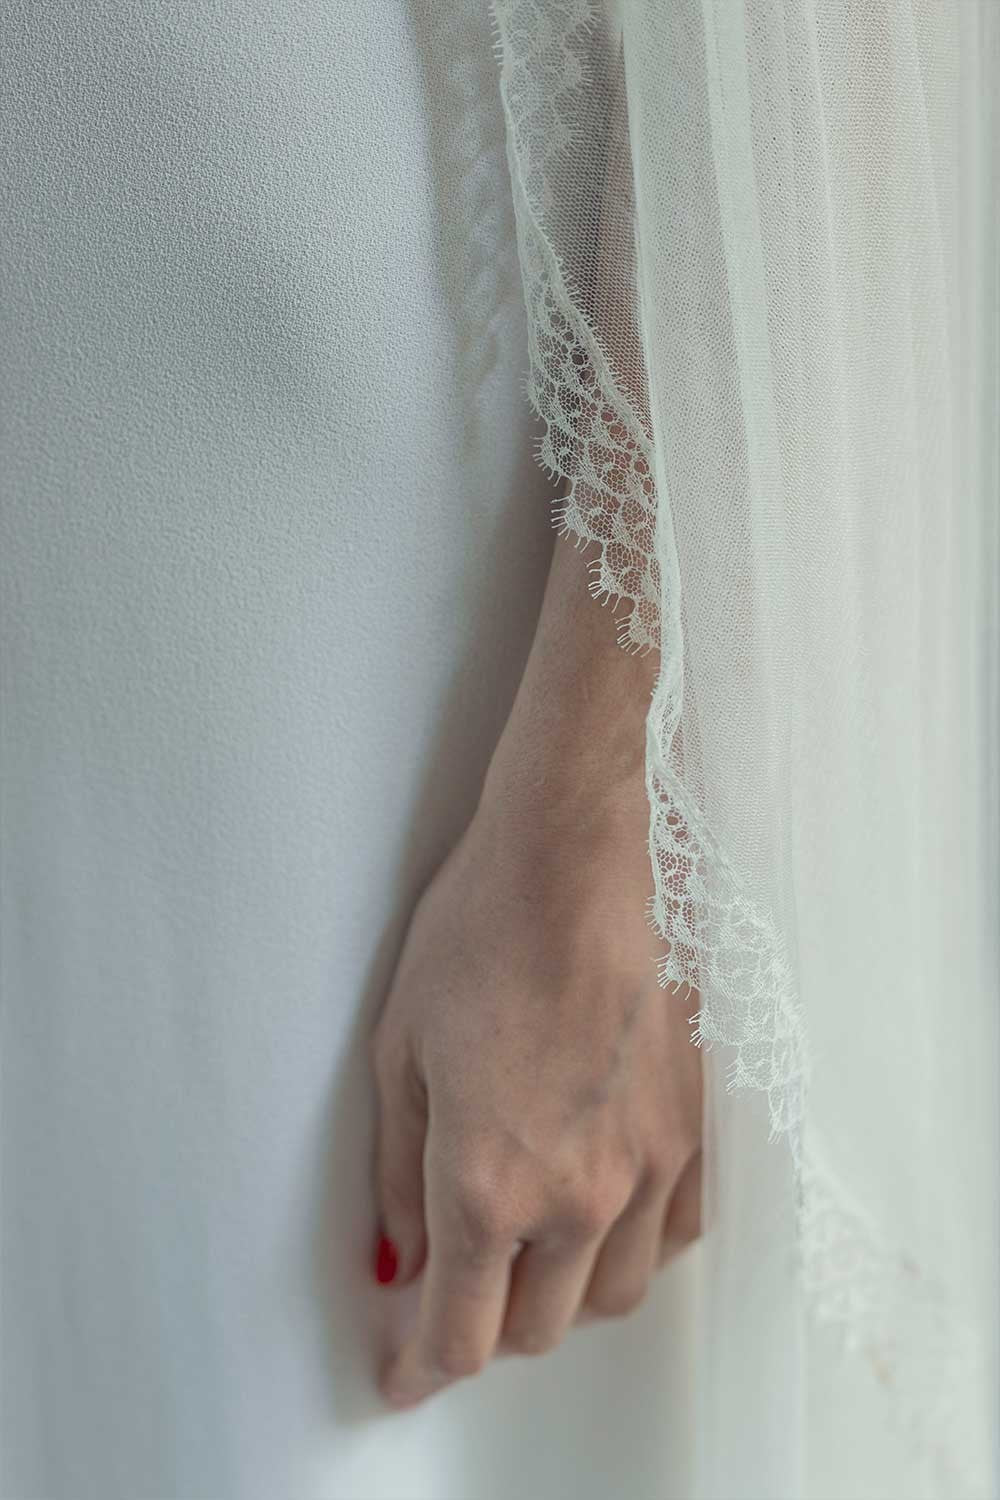 Long silk veil with lace trim